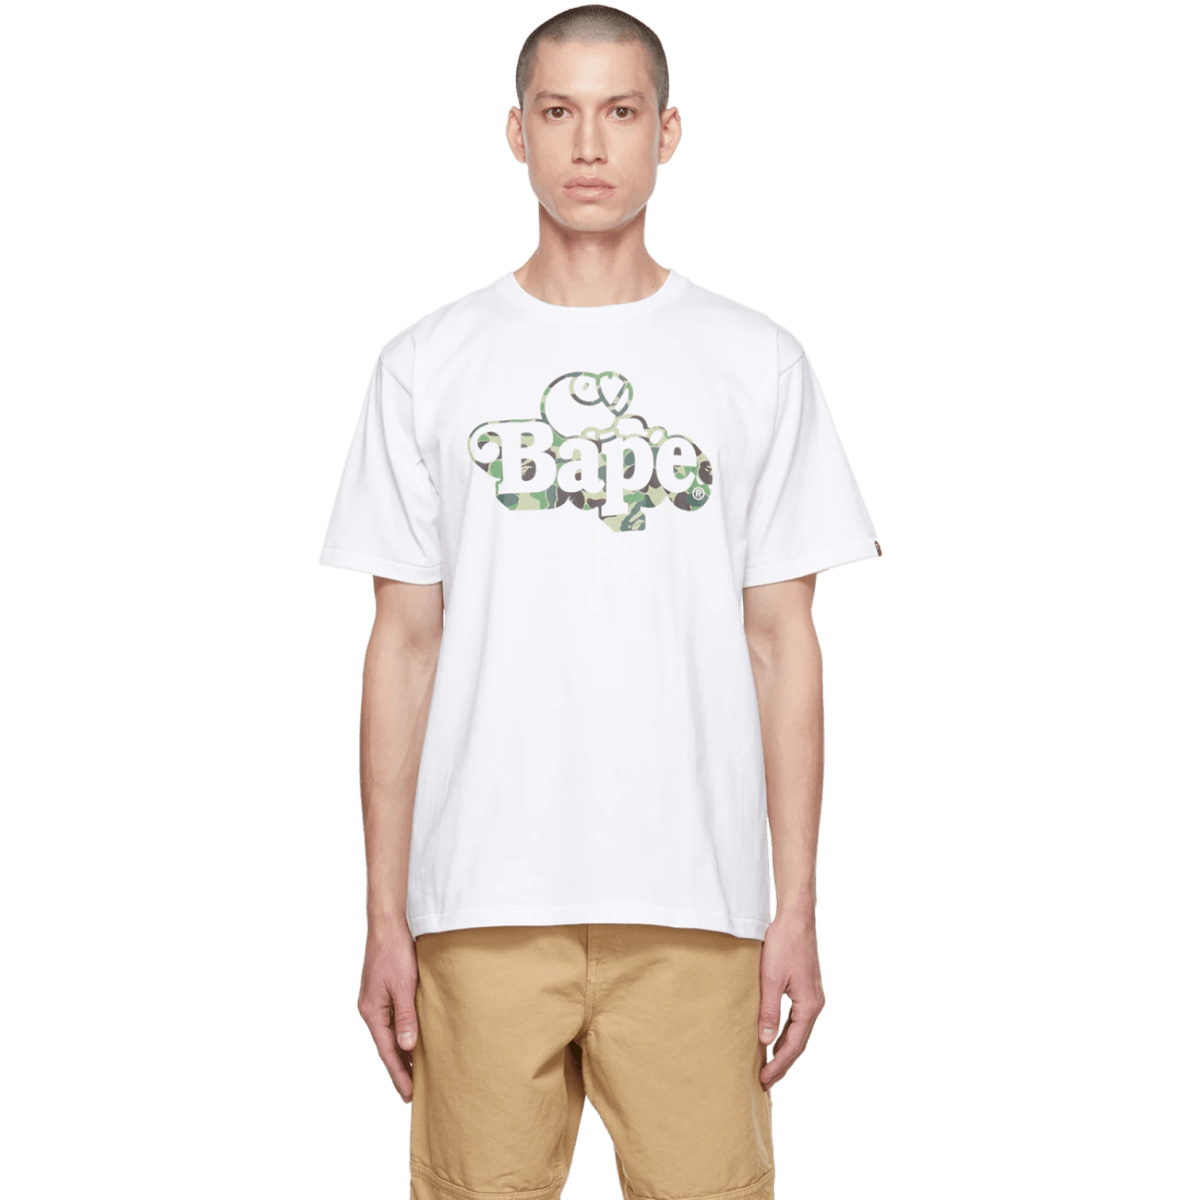 Bape White Camo Milo T-Shirt - sneaker - T-Shirt - Bape - Jawns on Fire